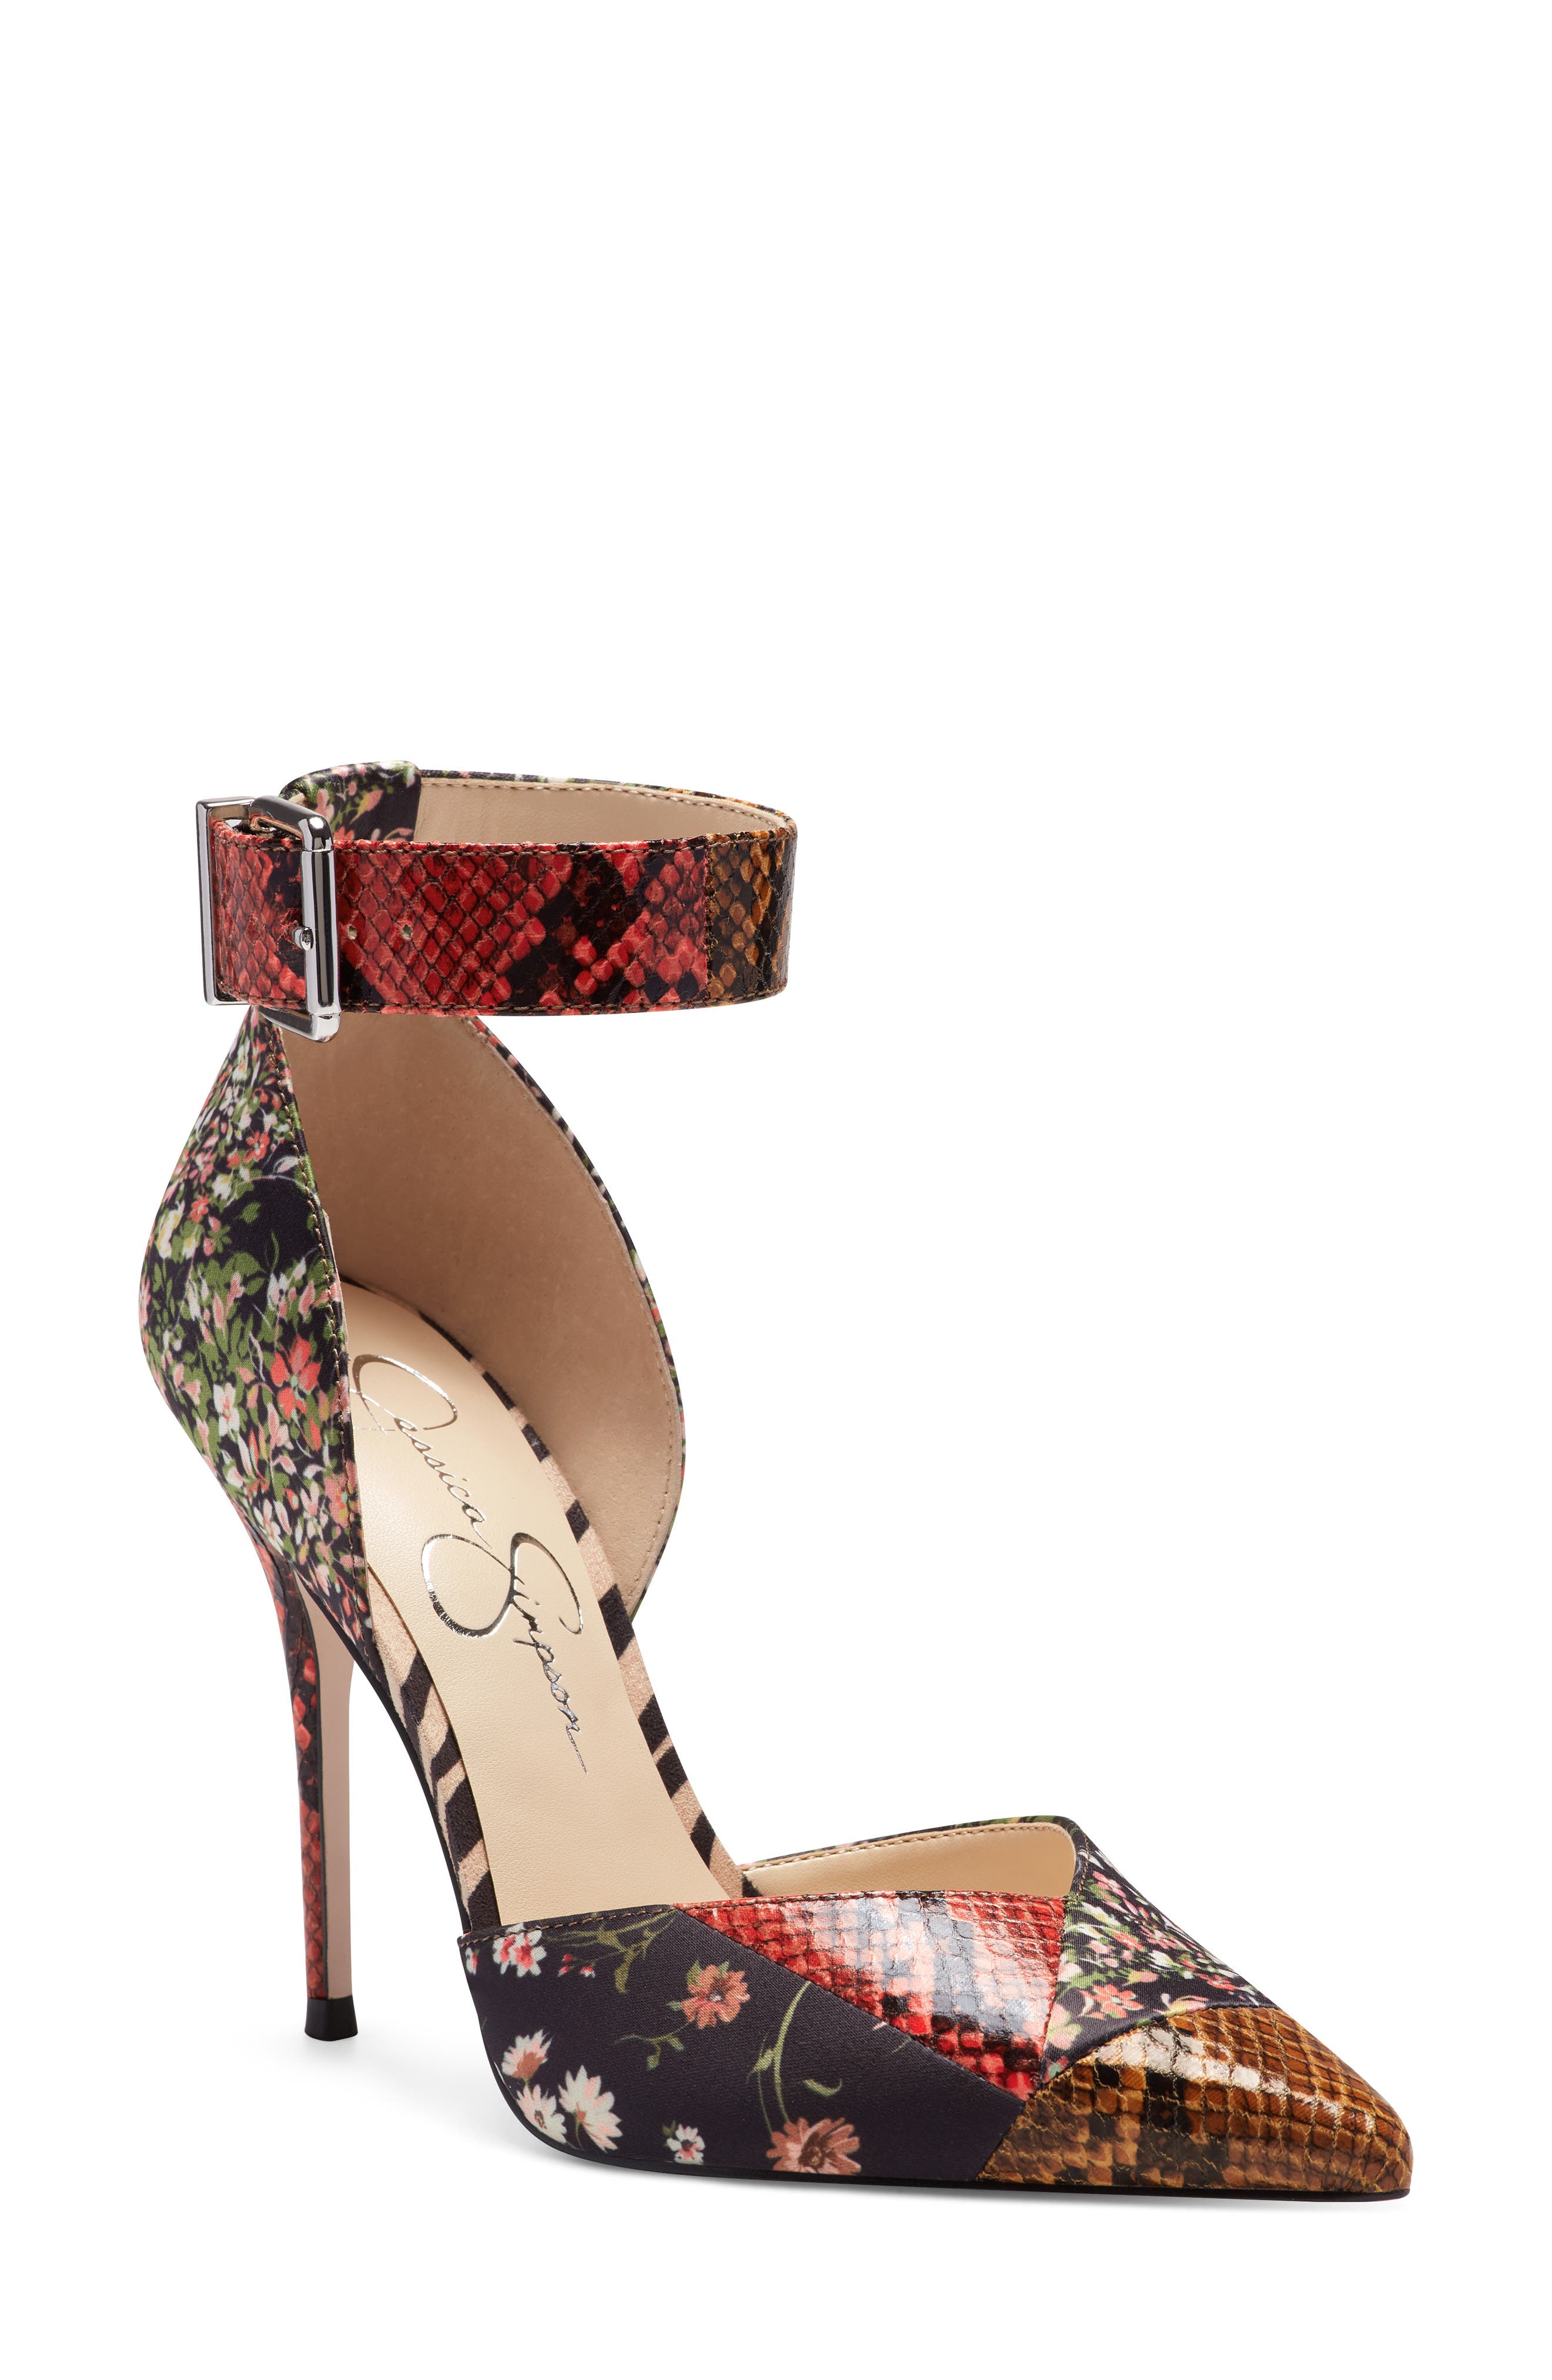 jessica simpson red high heels